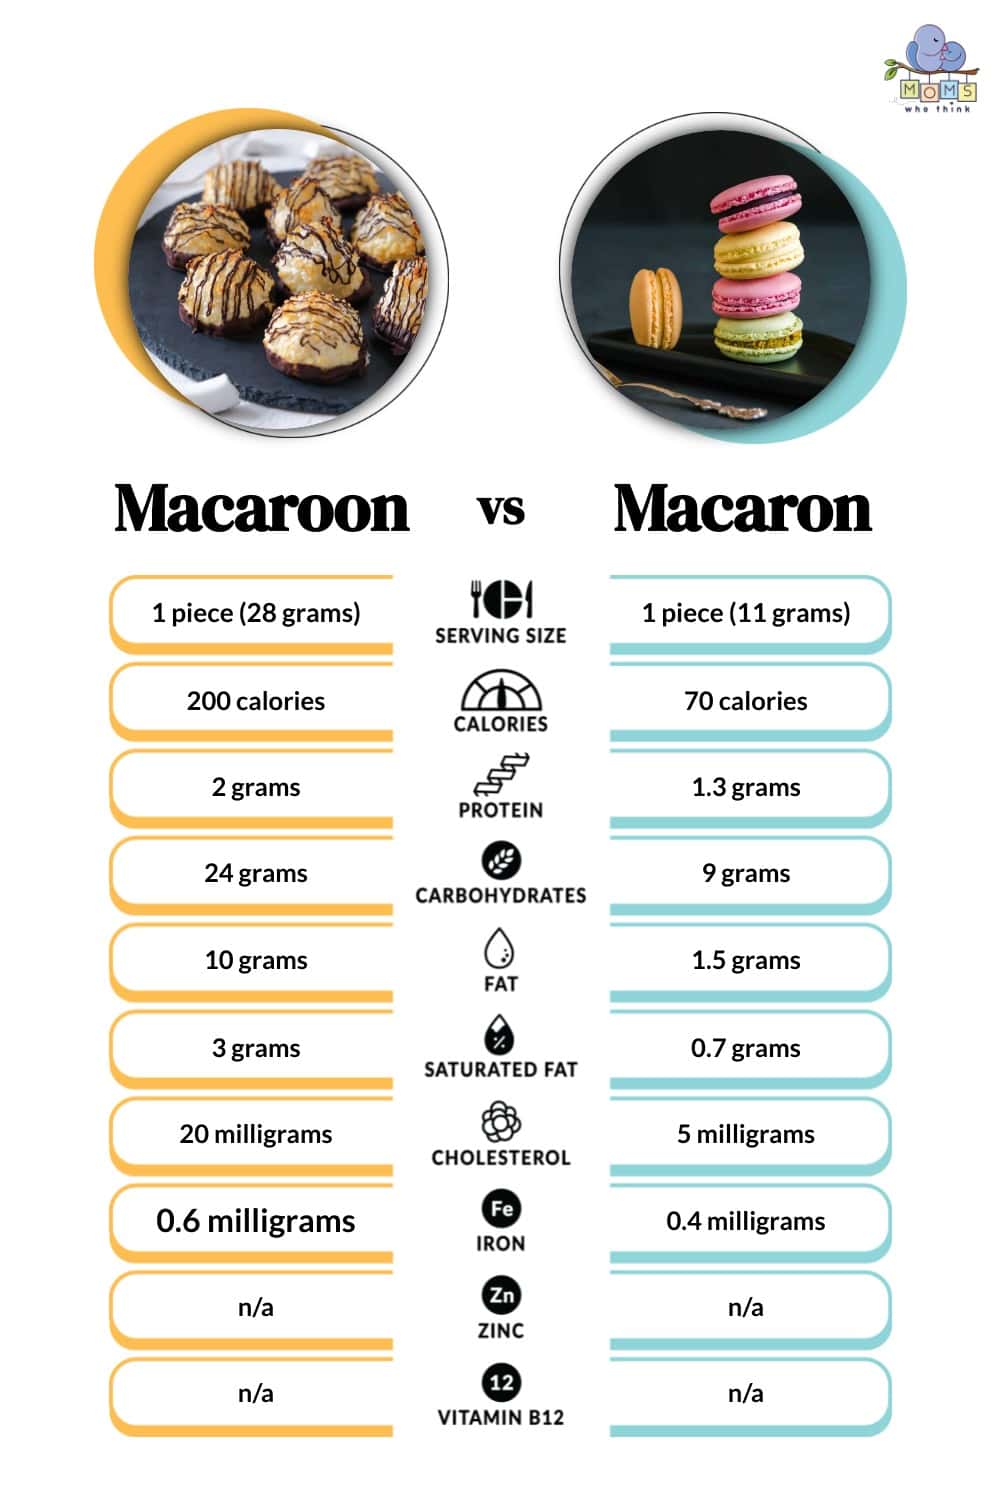 Macaroon vs Macaron Nutritional Facts